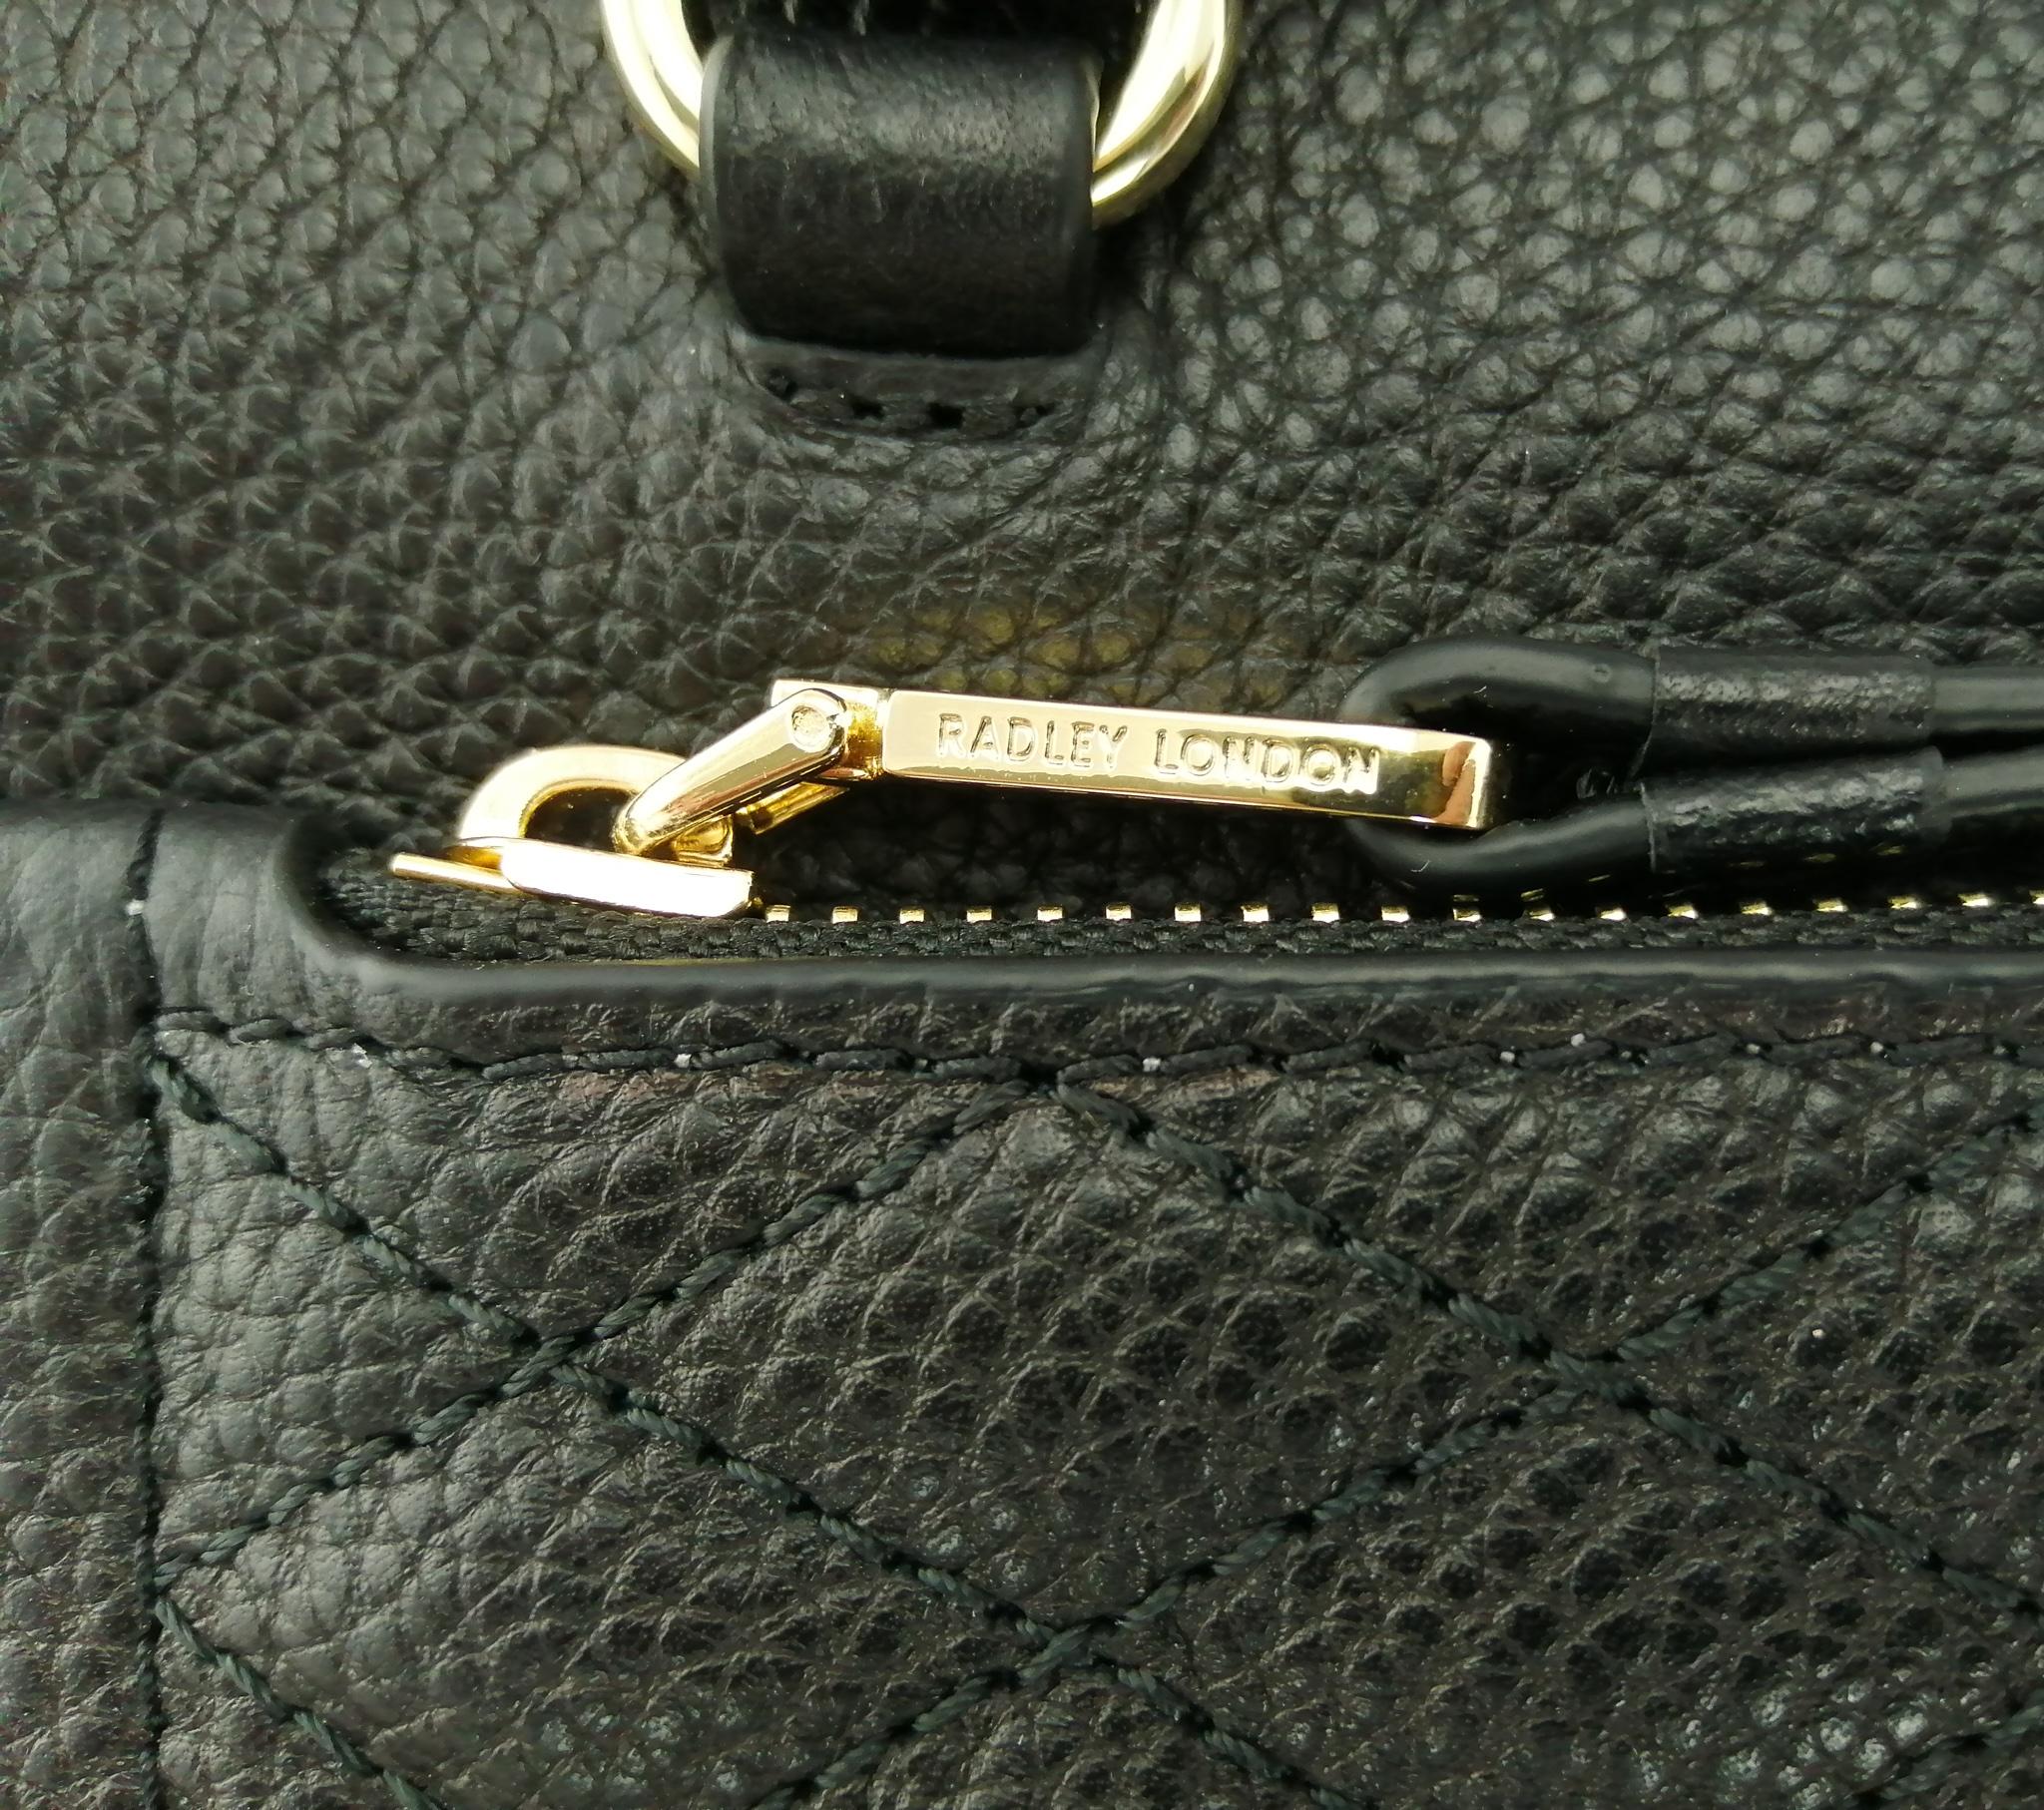 Radley Zip Top Multiway Tote Bag Black Medium Quilted Shoulder Handbag ...